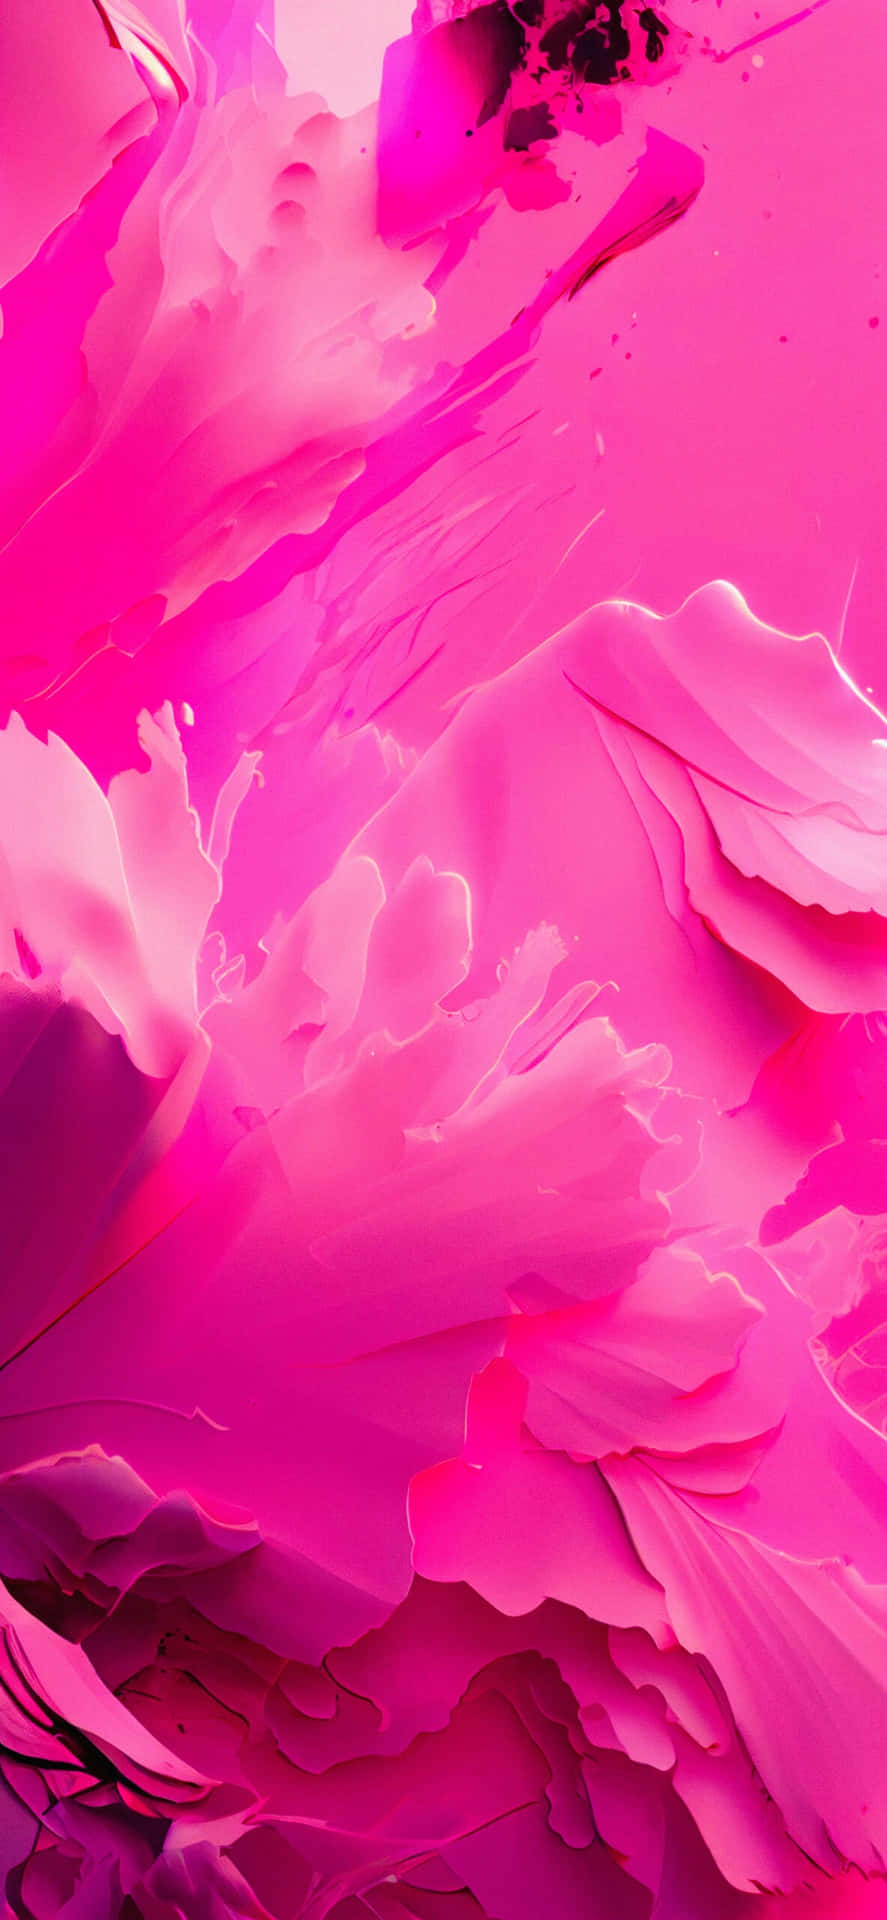 Vibrant Pink Abstract Art.jpg Wallpaper